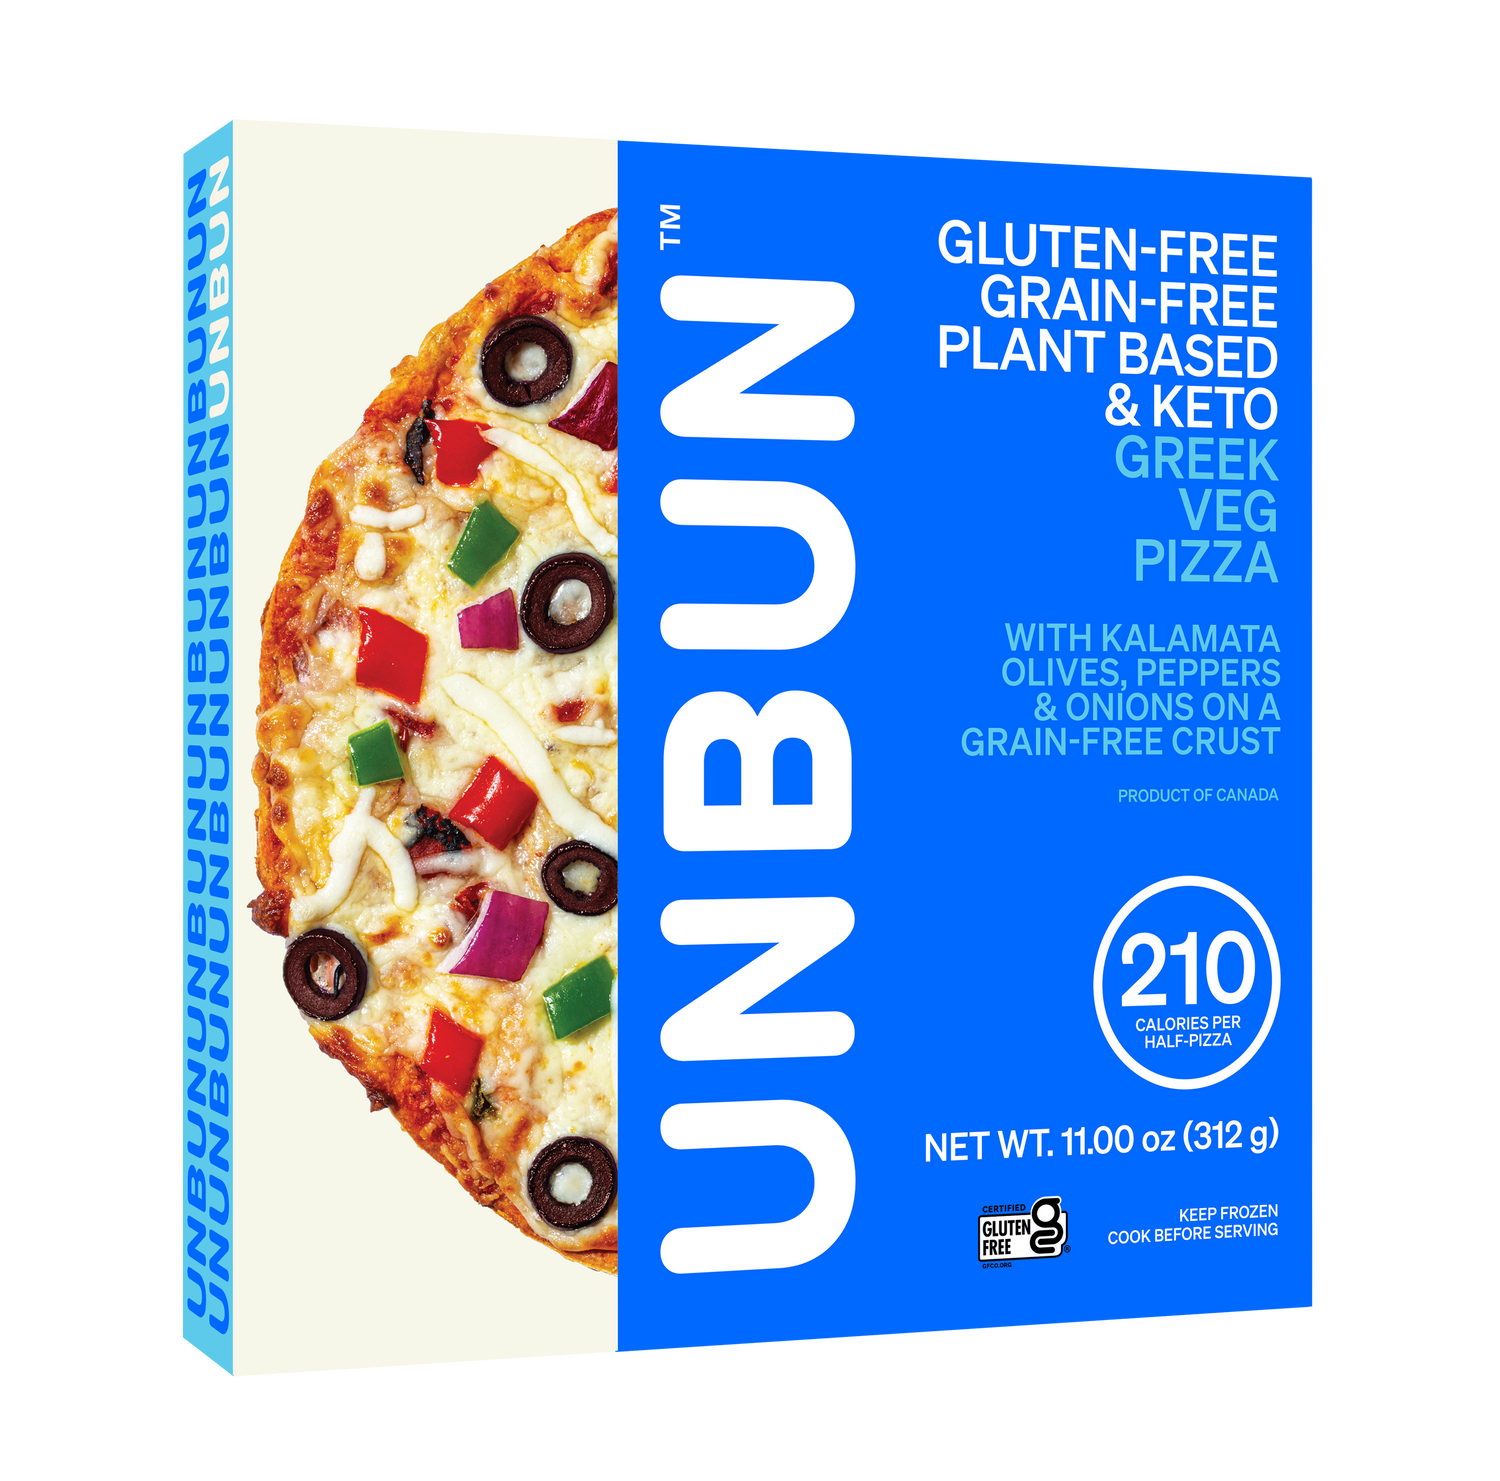 Unbun Greek Veg Pizza